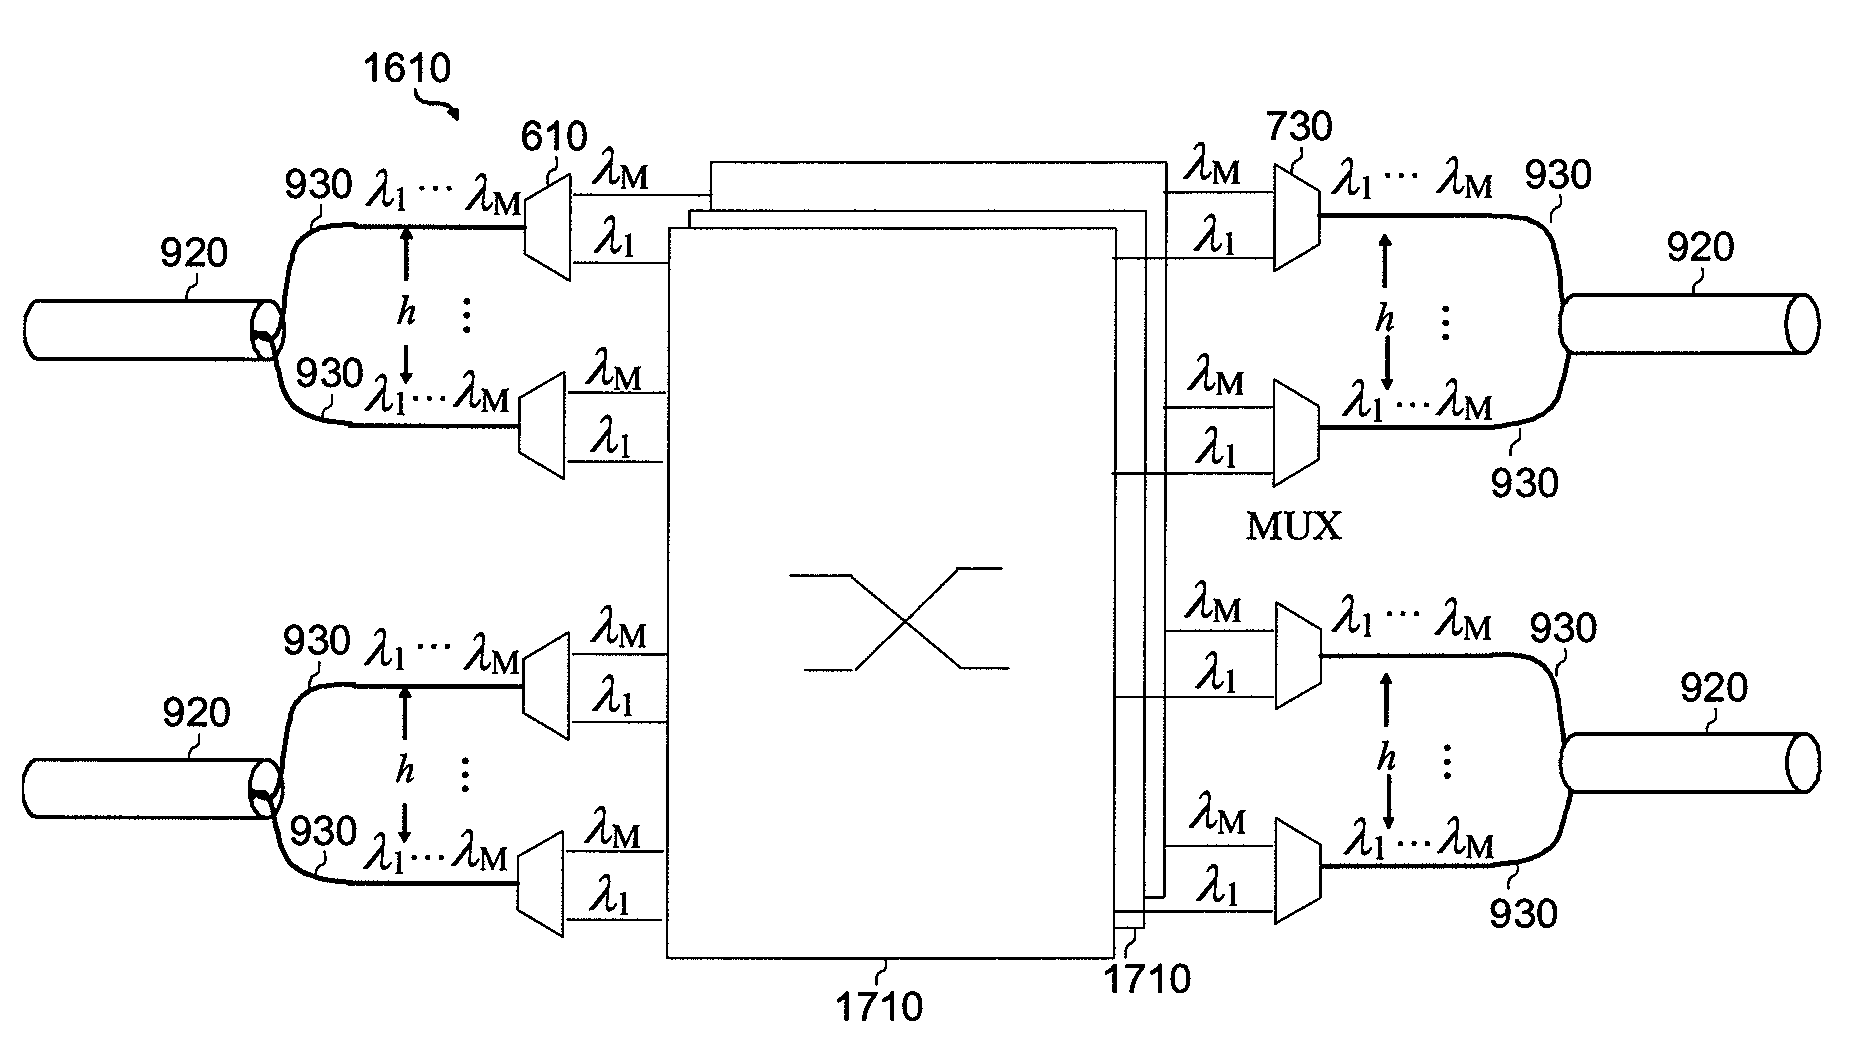 Methods for non-wavelength-converting multi-lane optical switching